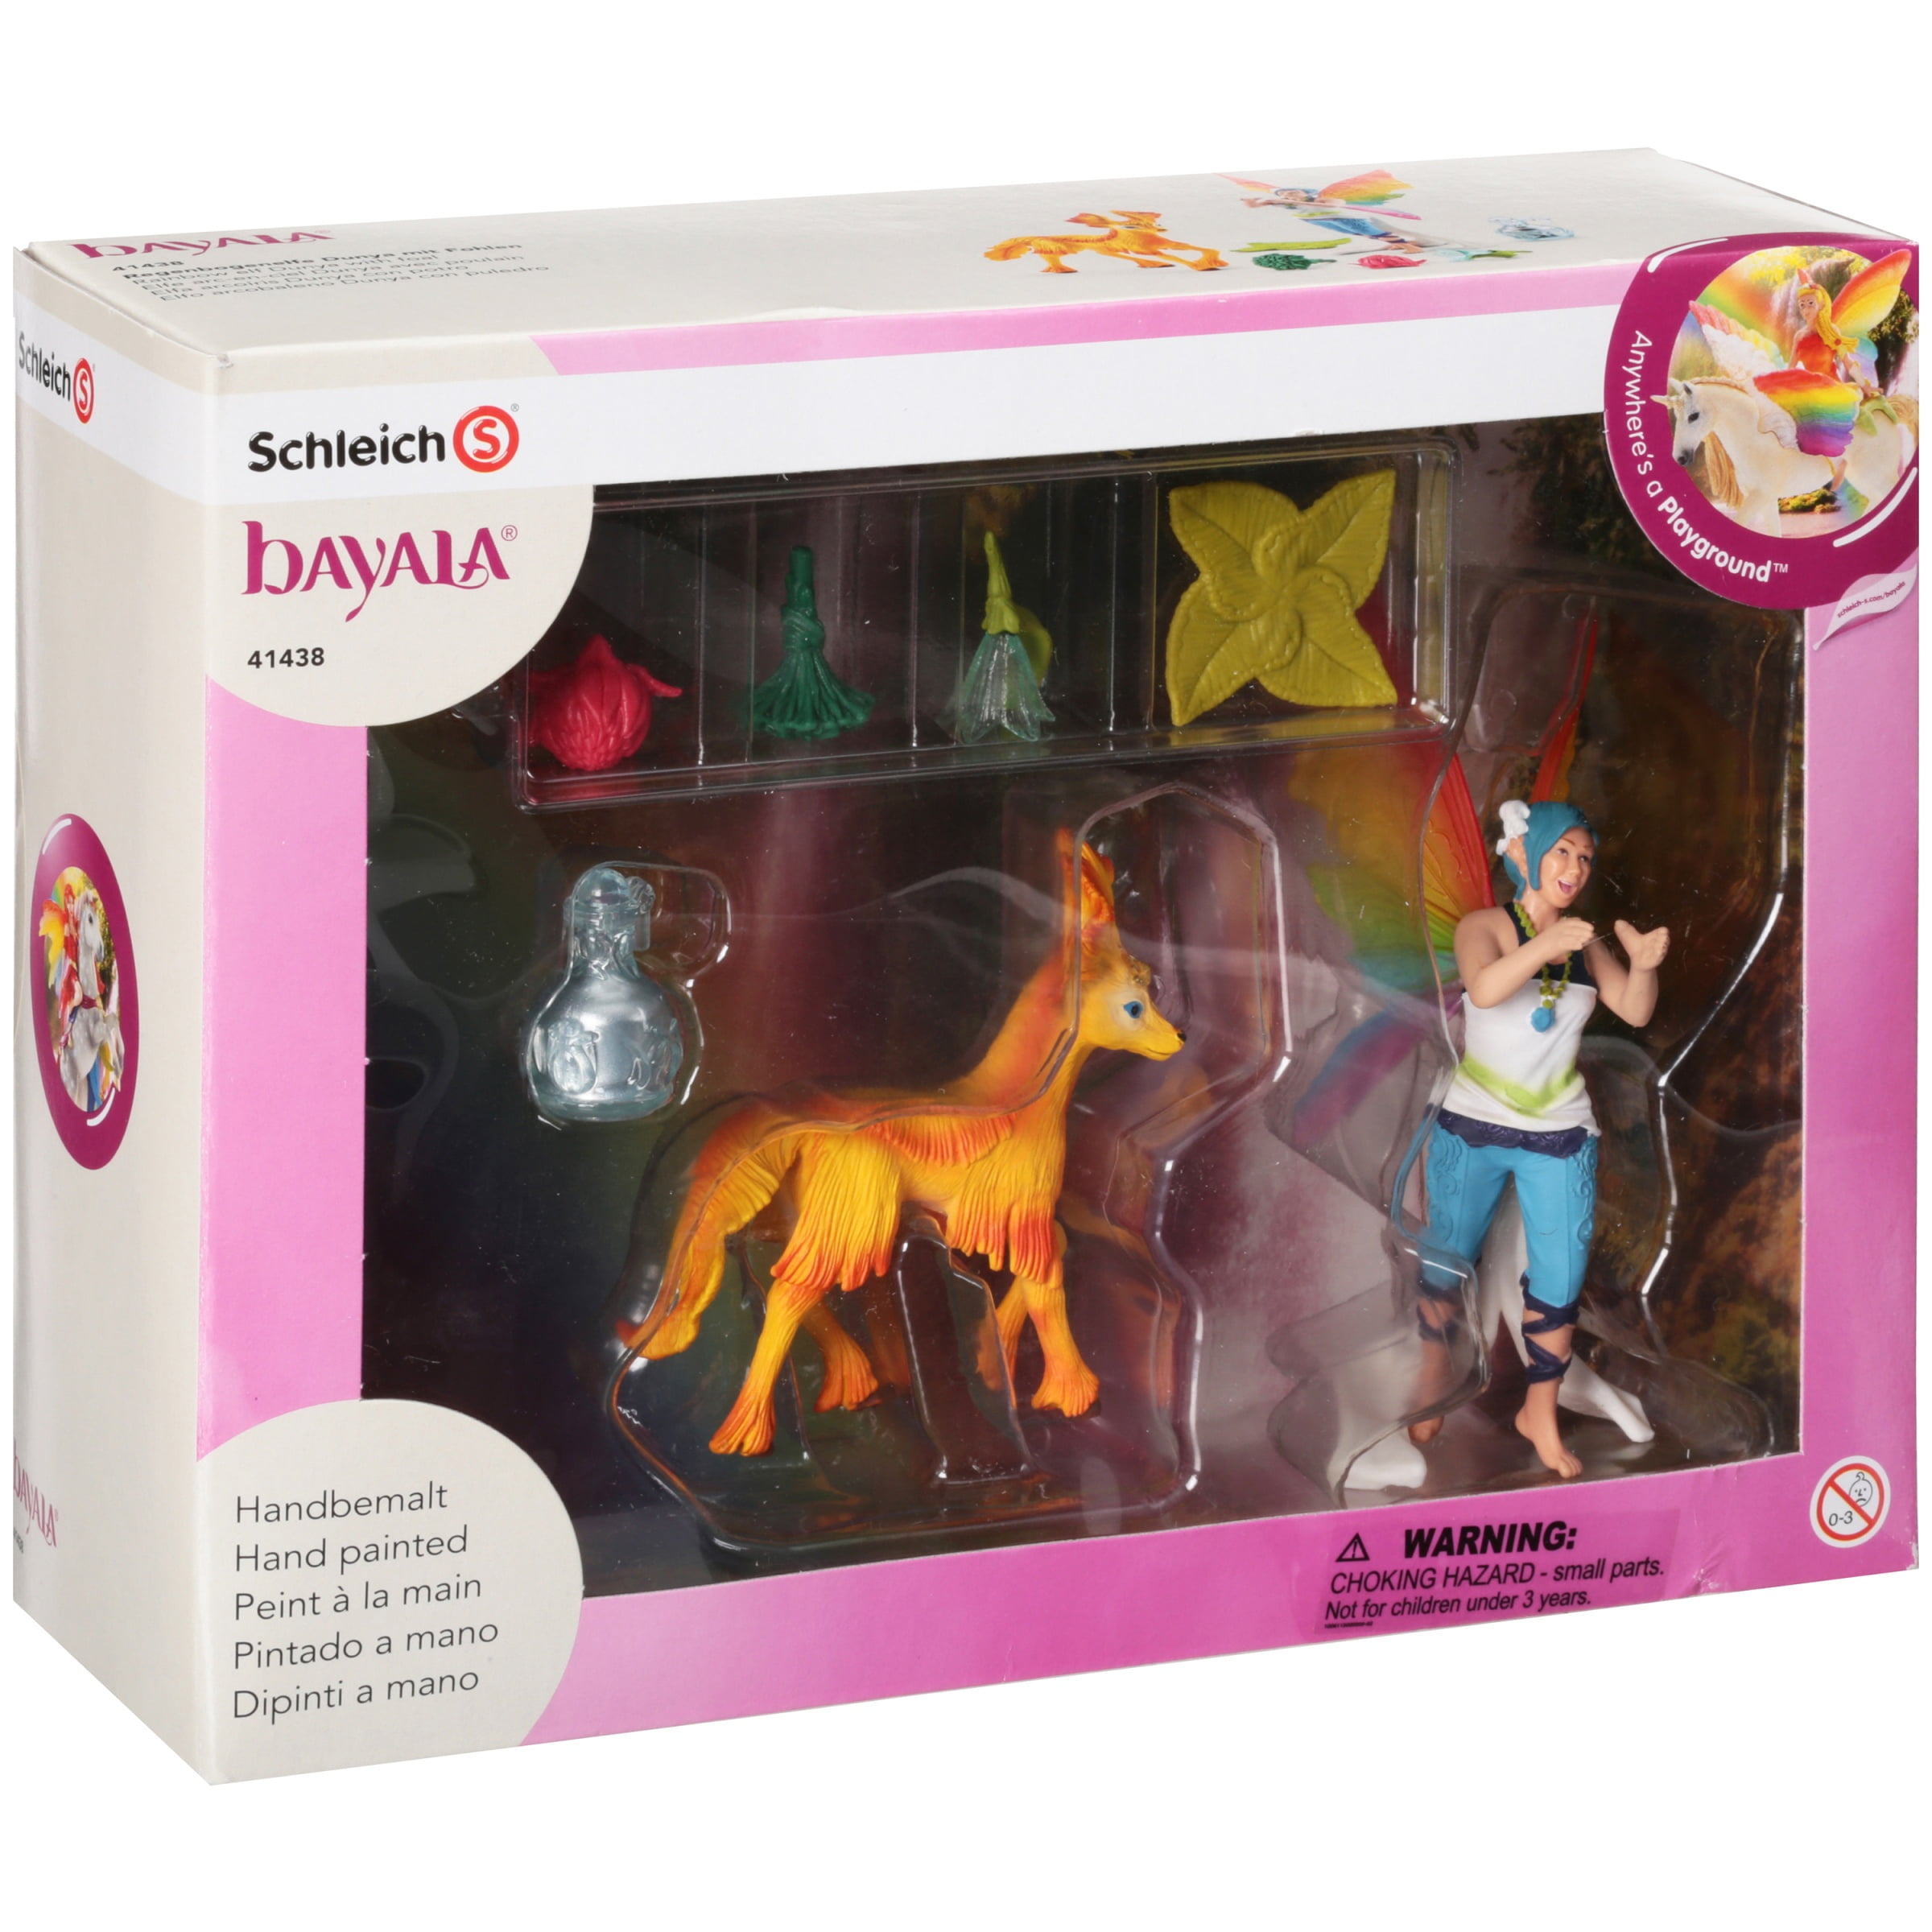 Schleich 41438 BAYALA Dunya with foal playset elf toy rainbow wings fairy elves 